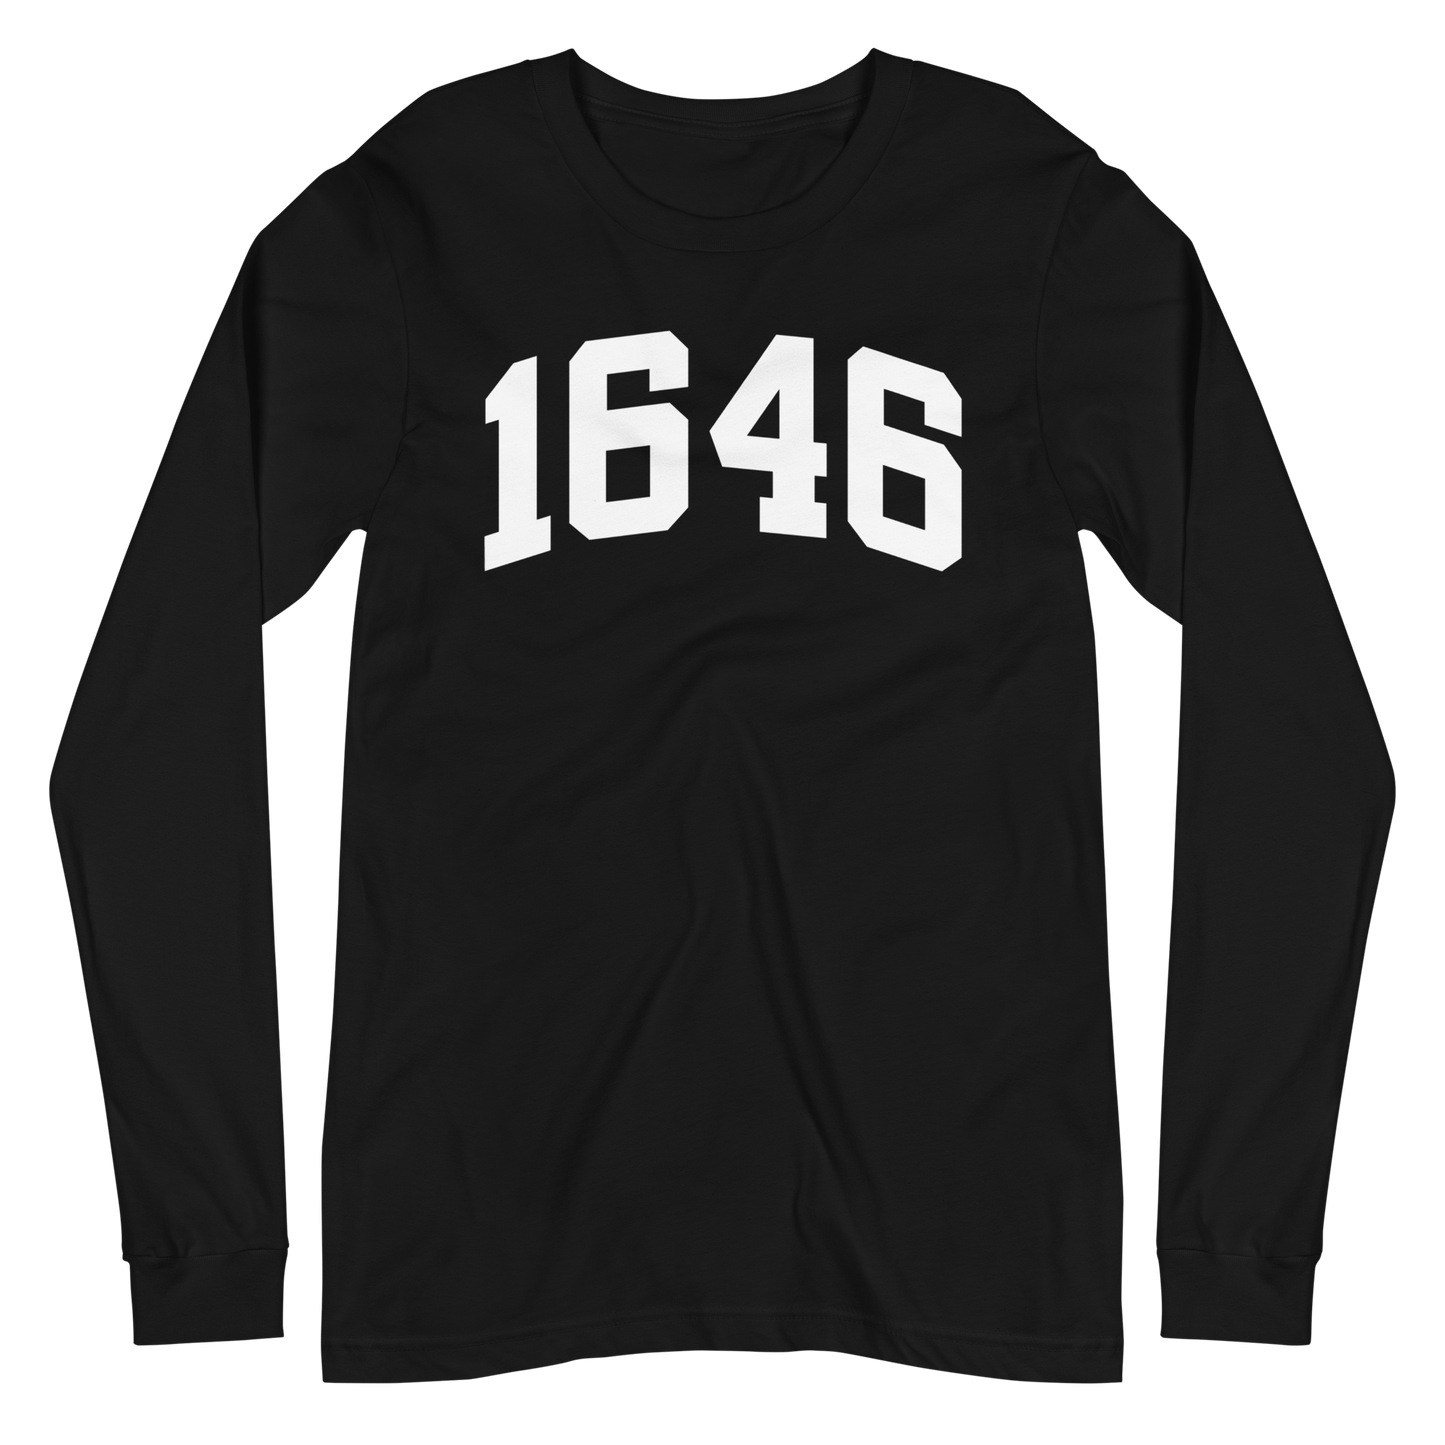 1646 Long Sleeve Shirt